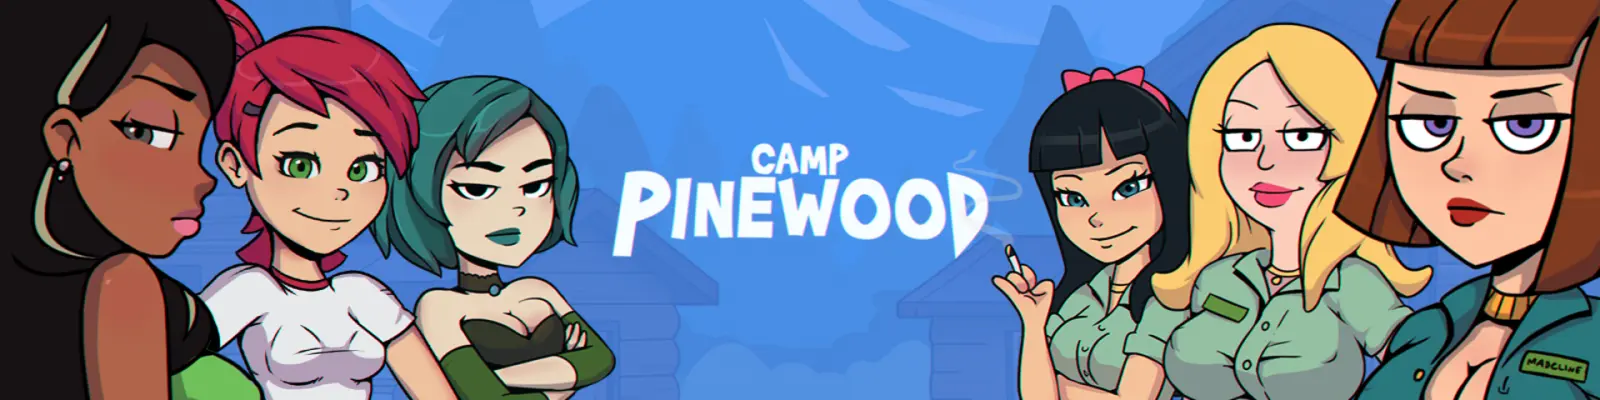 Camp Pinewood [v2.9.0 Bugfix] main image